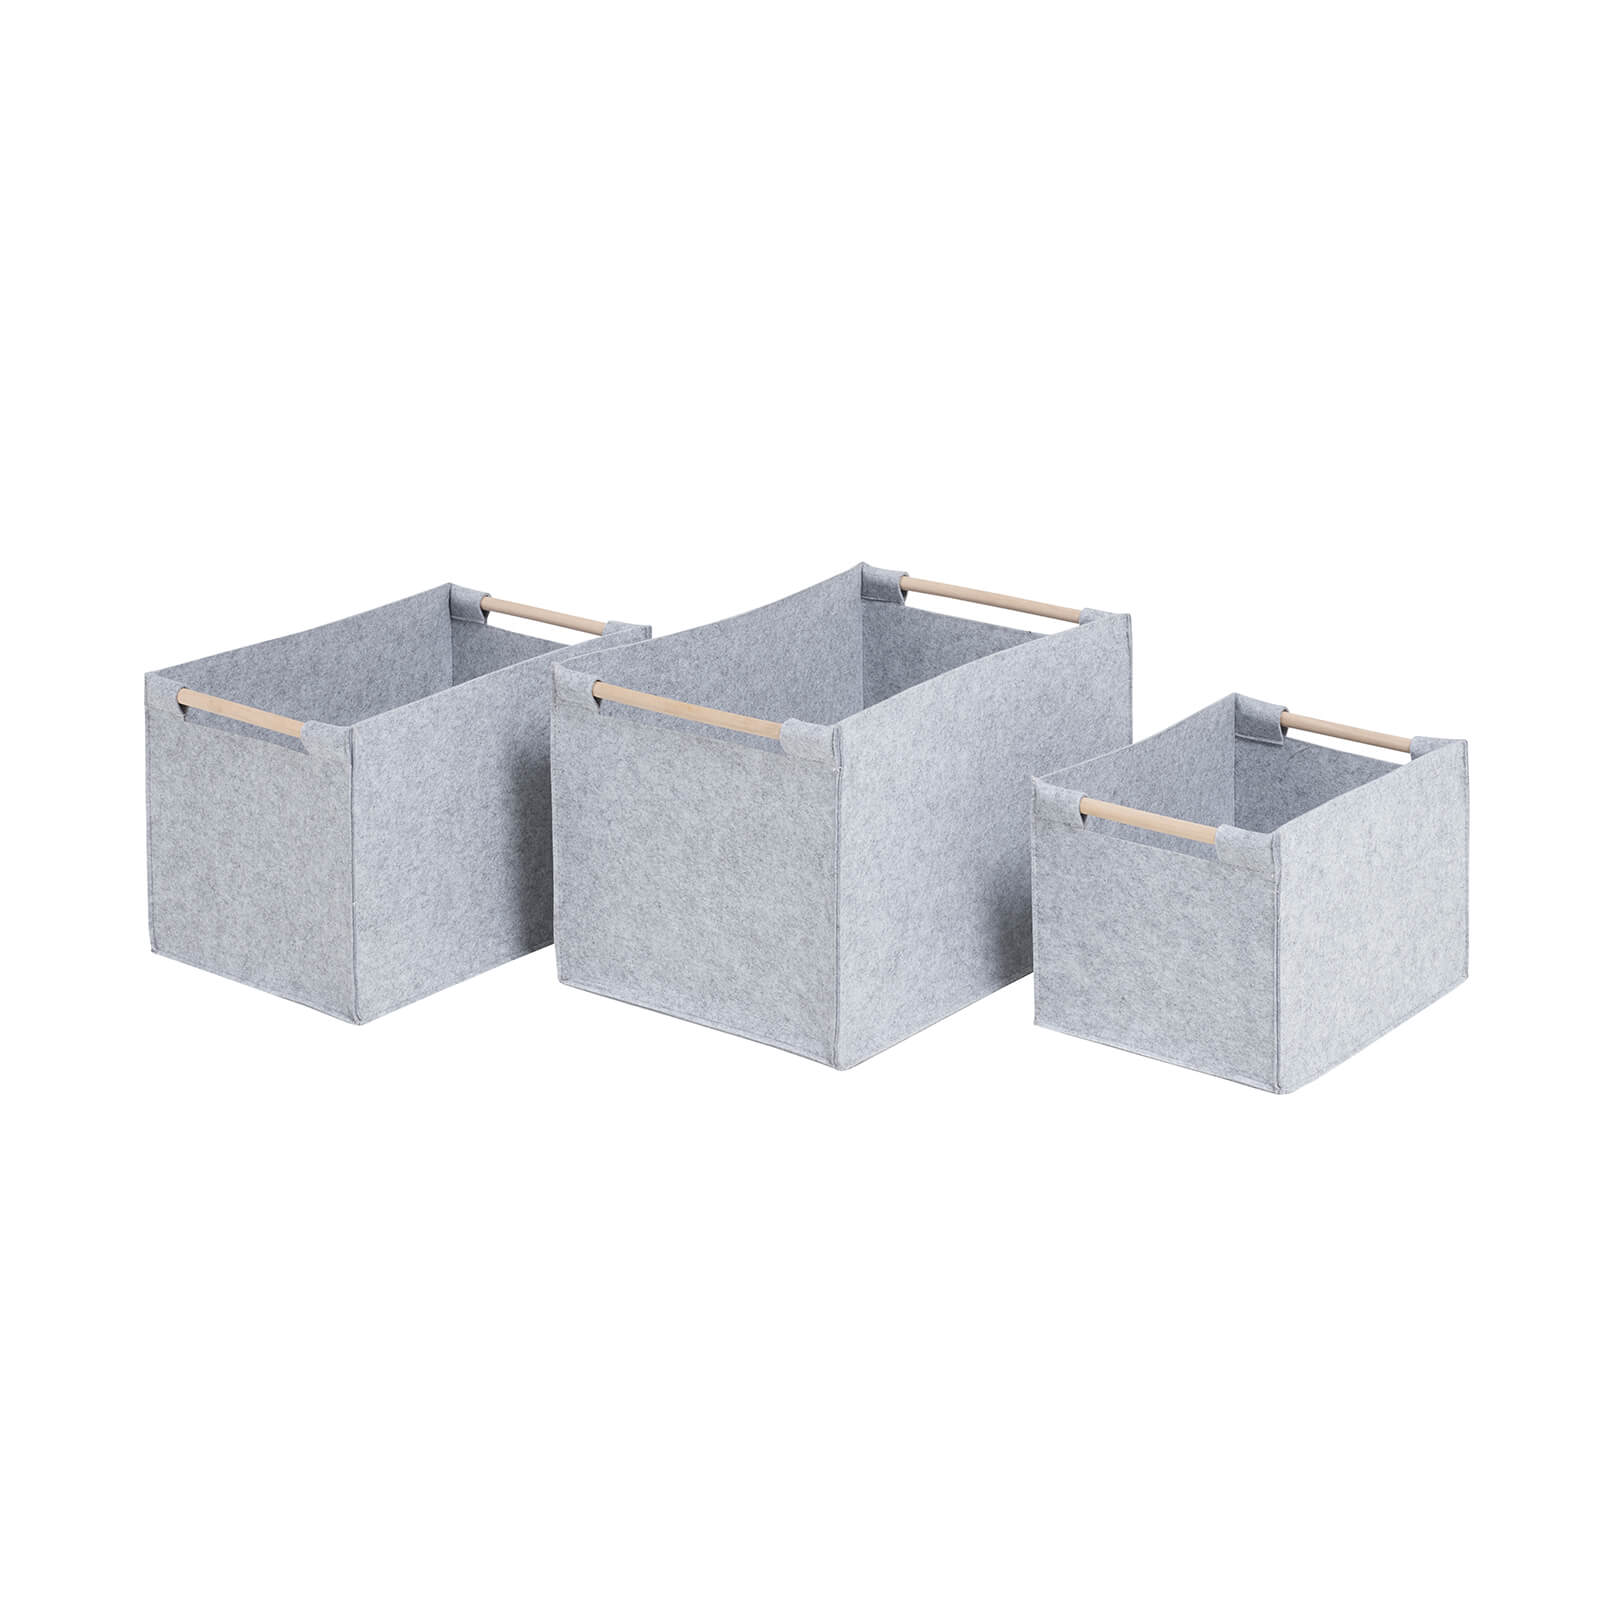 Grey Felt Baskets with Wooden Handles - Set of 3